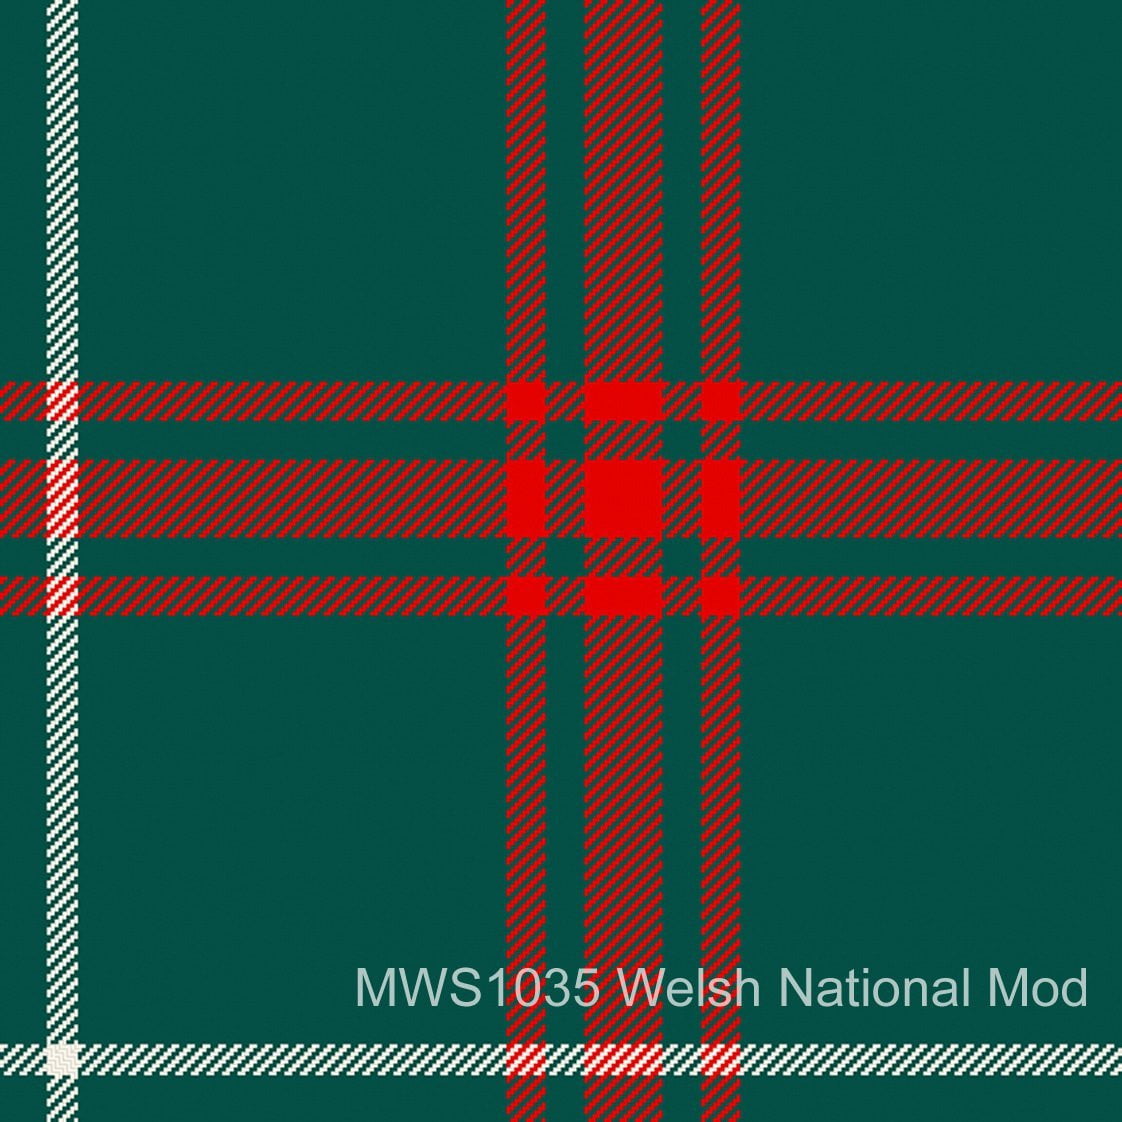 Welsh National Modern